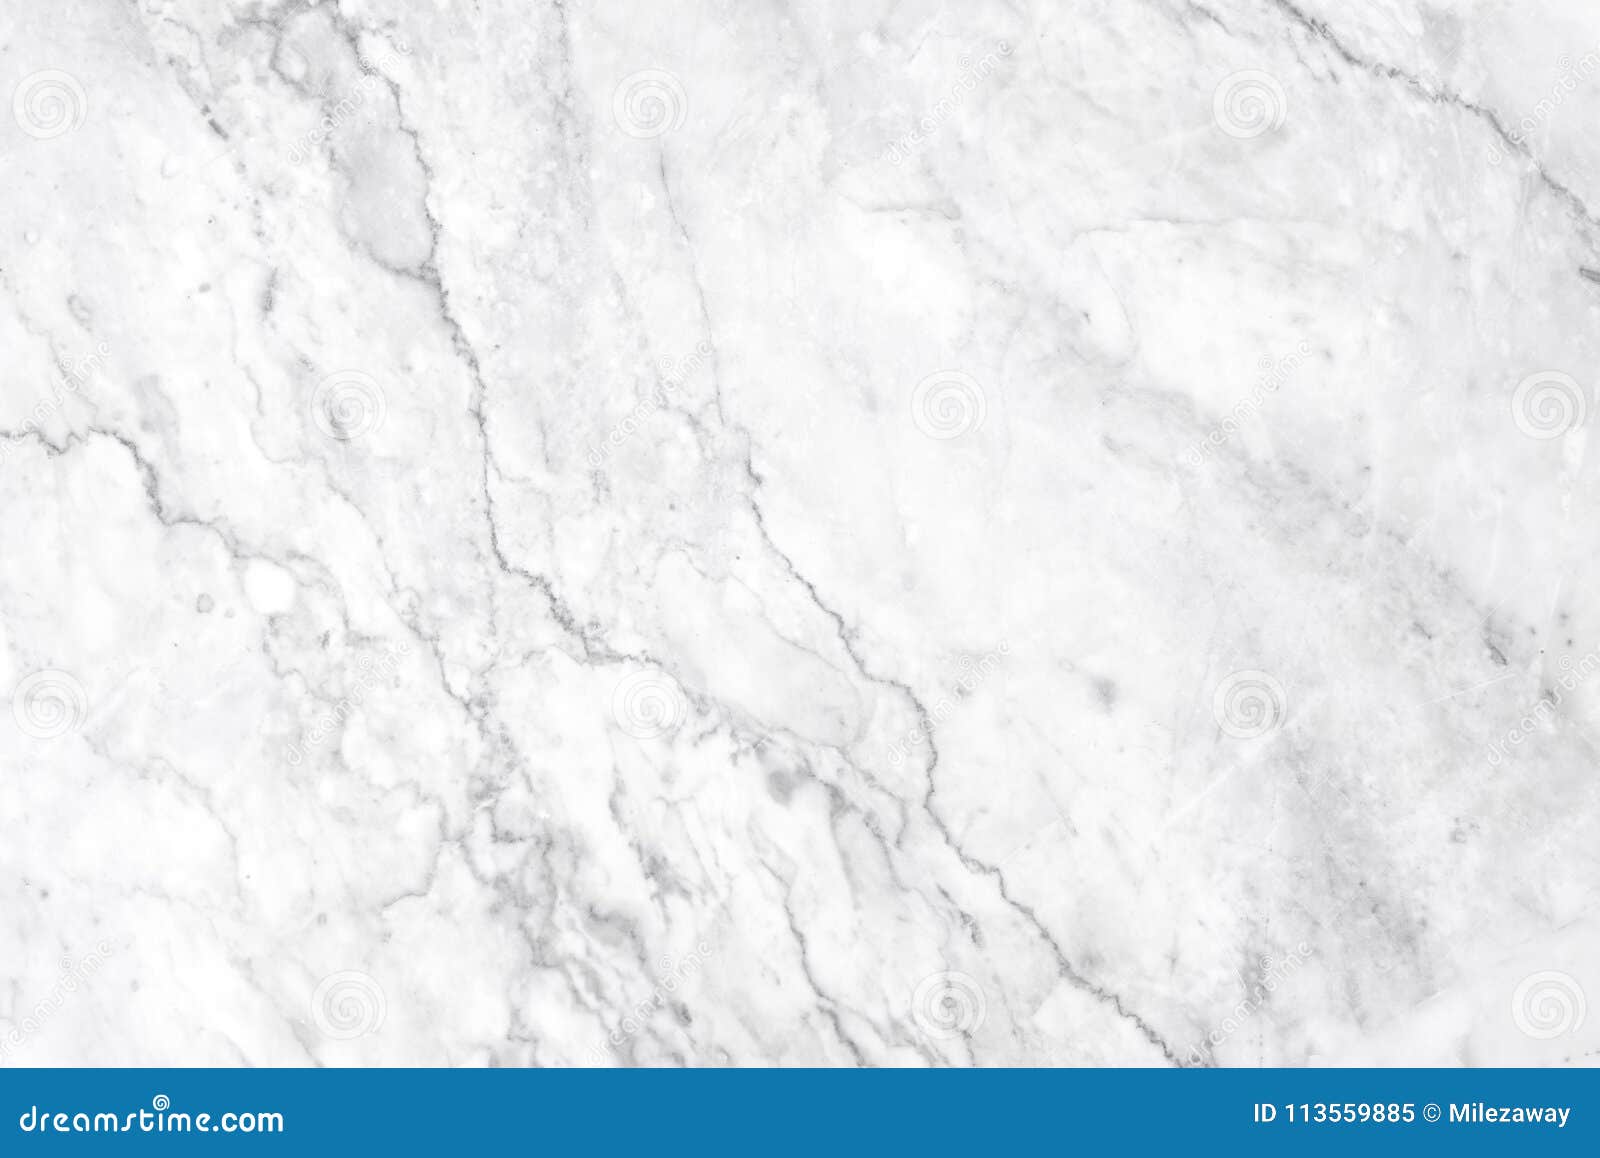 carrara white marble texture